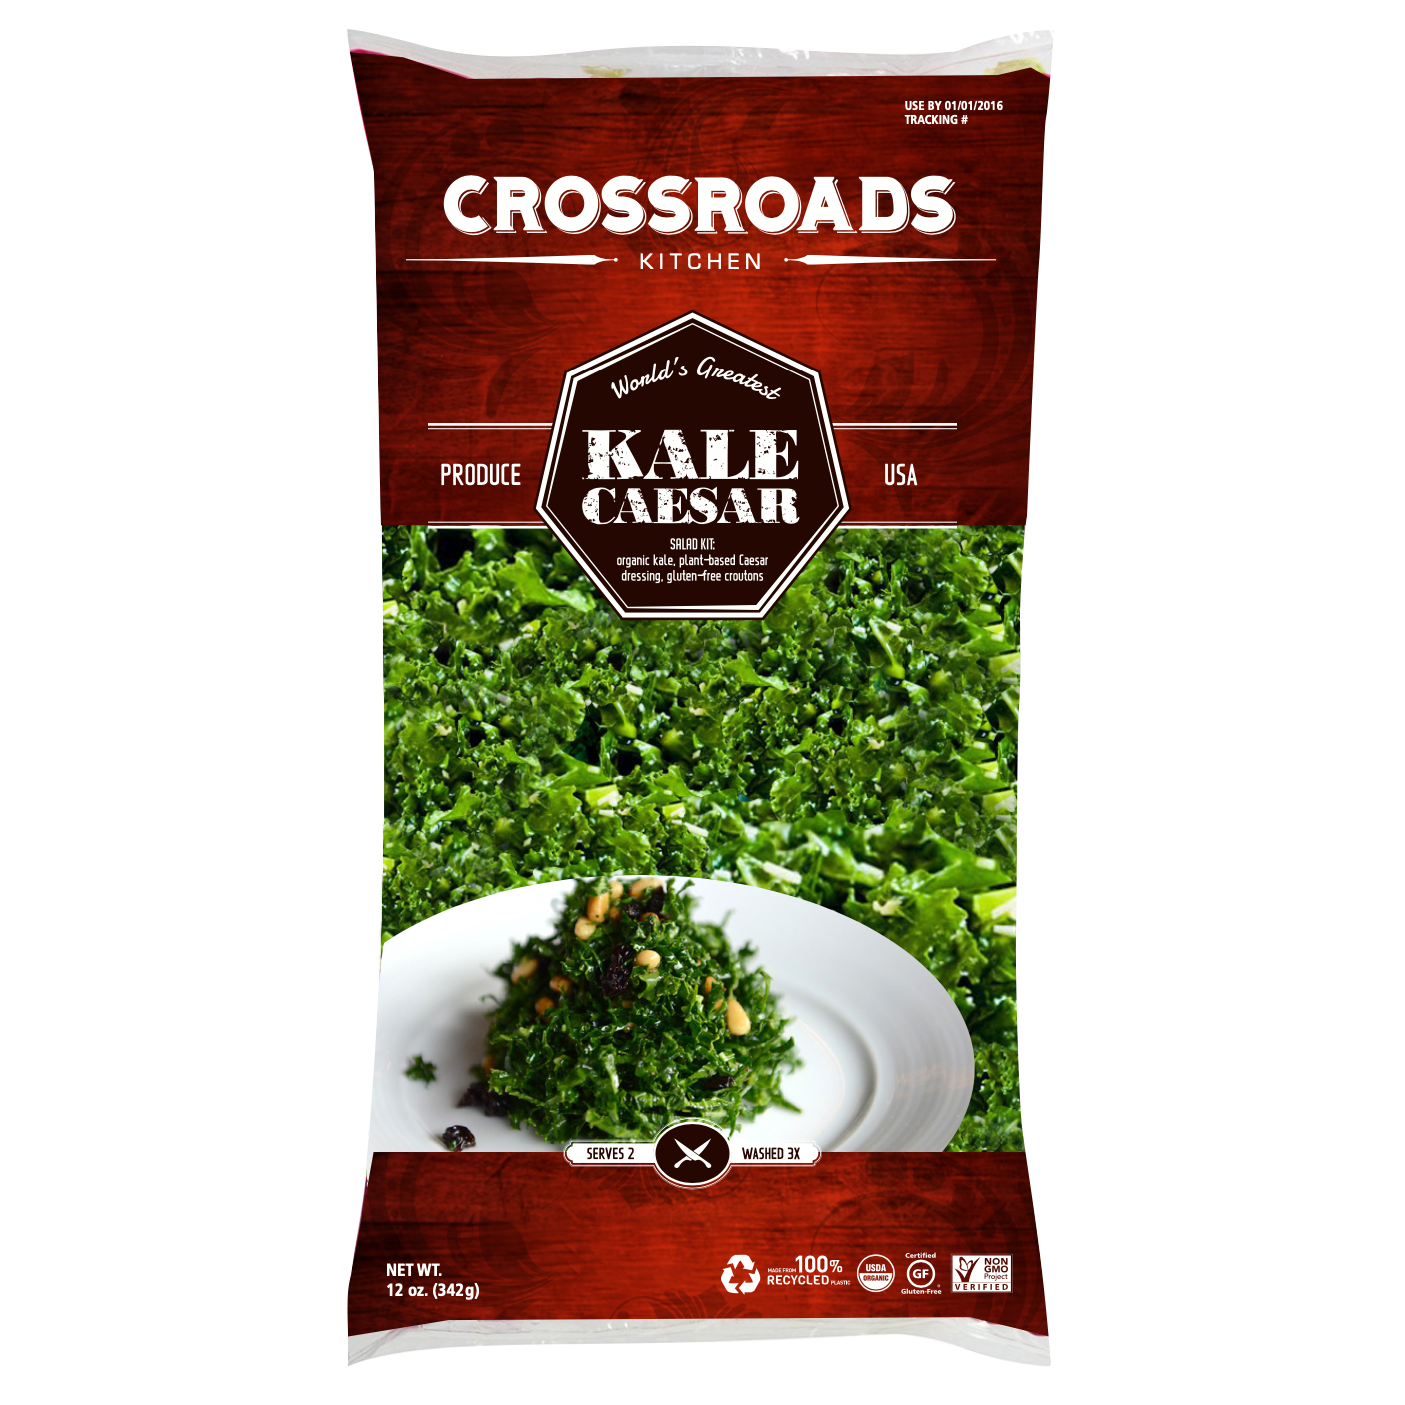 Crossroads Kale Ceasar